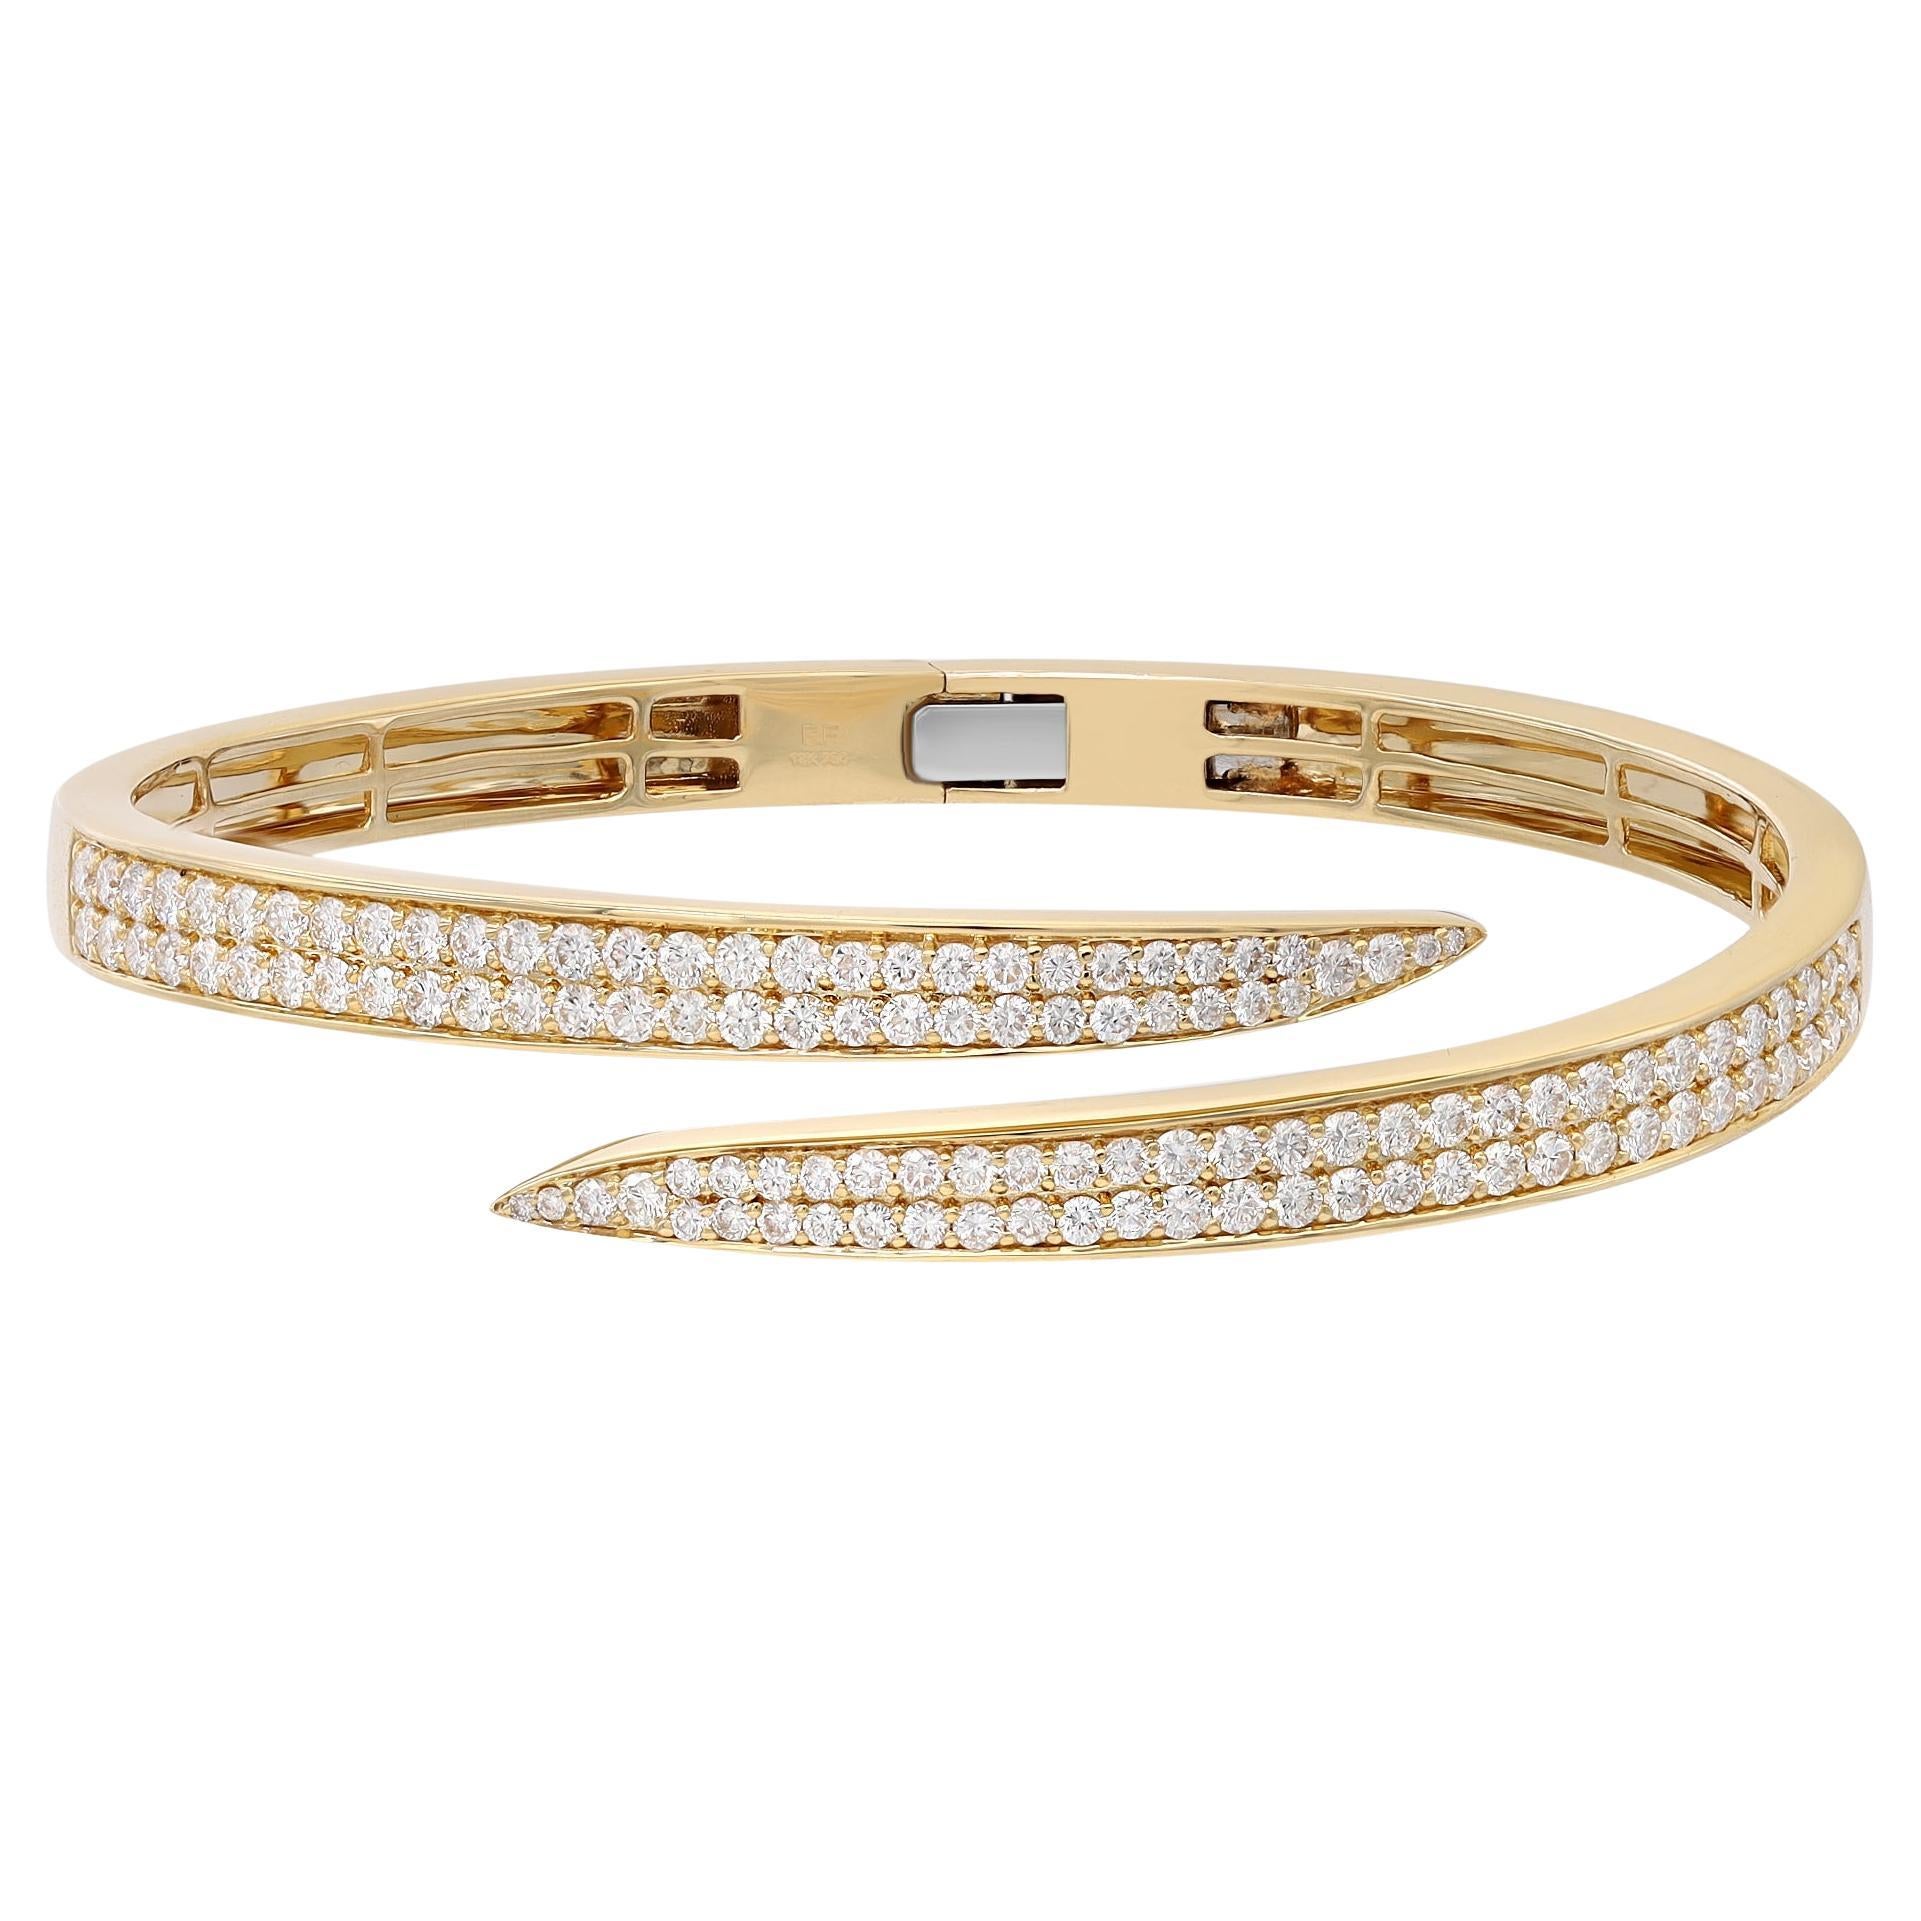 Rachel Koen Pave Set Round Cut Diamond Bangle Bracelet 18K Yellow Gold 2.83Cttw For Sale